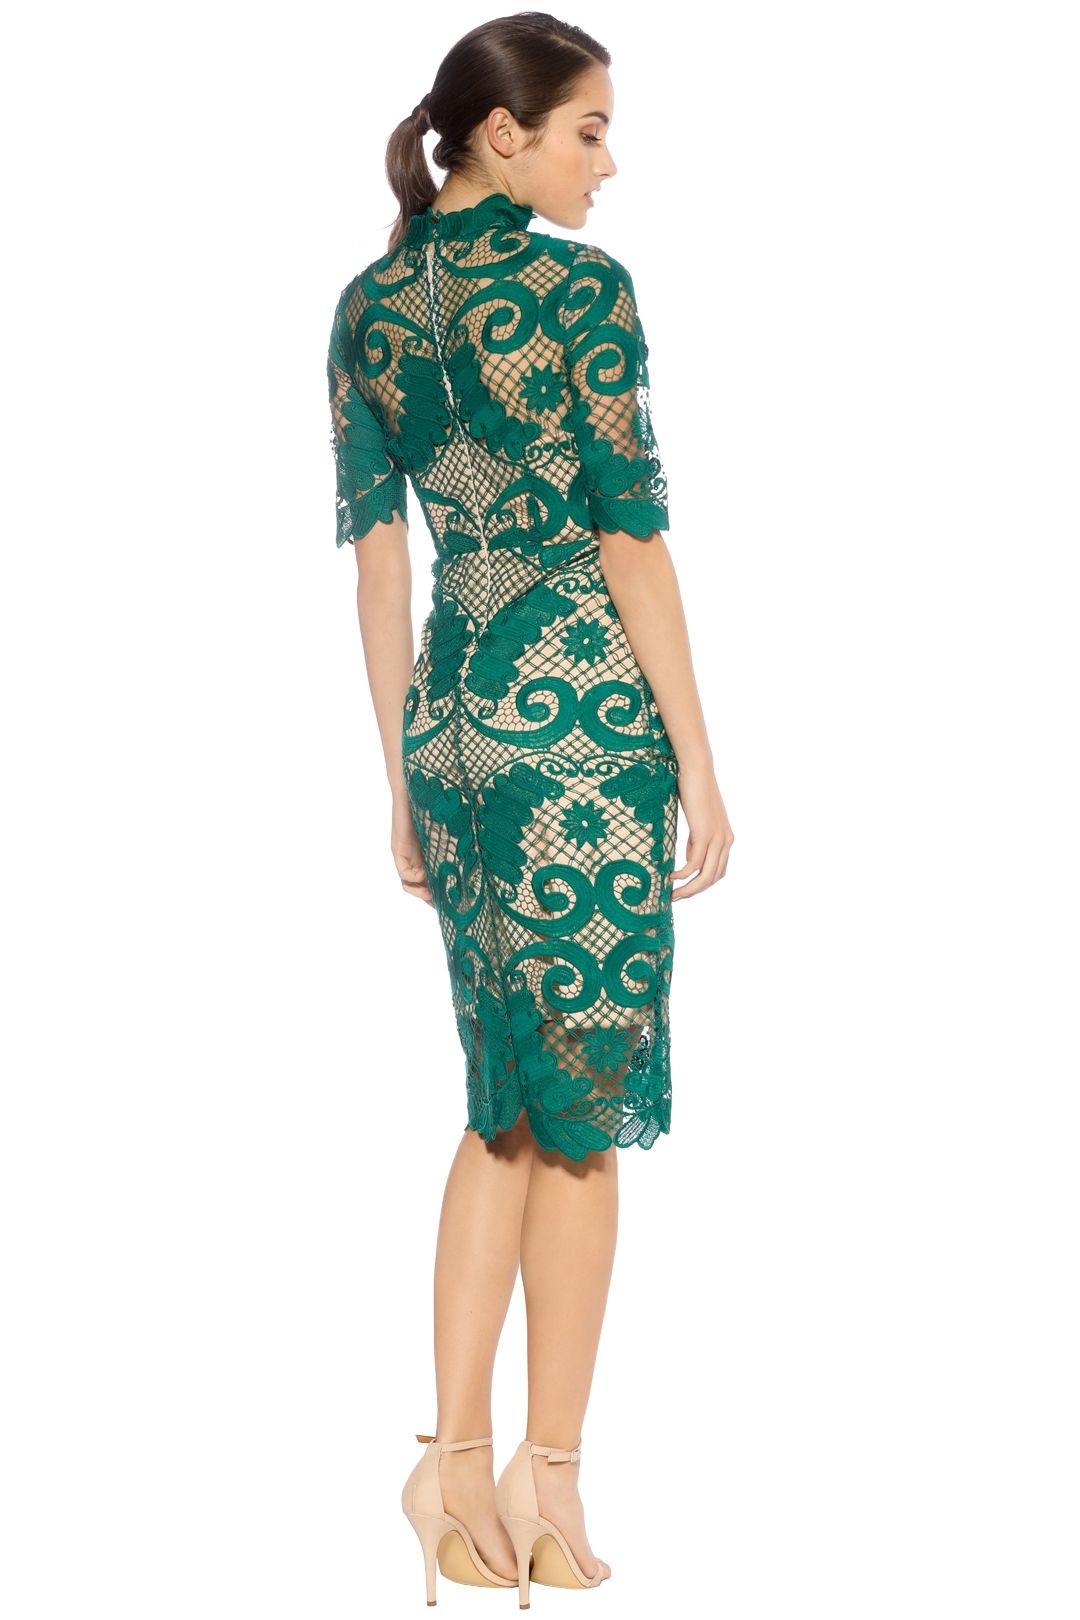 Thurley - Babylon Pencil Lace Dress - Emerald - Back